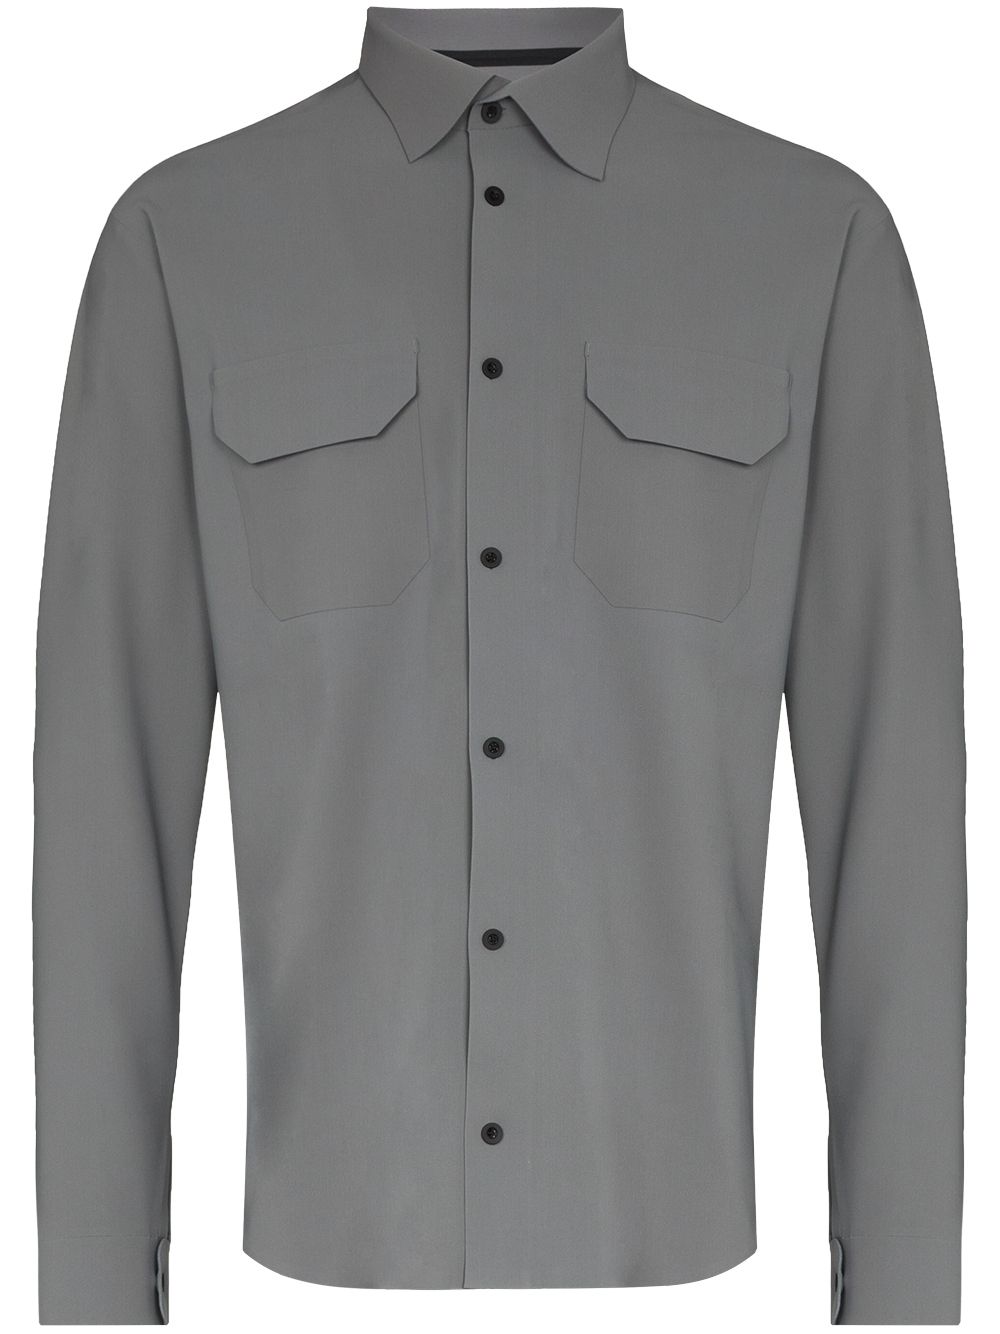 GR10K double-pocket long-sleeve shirt